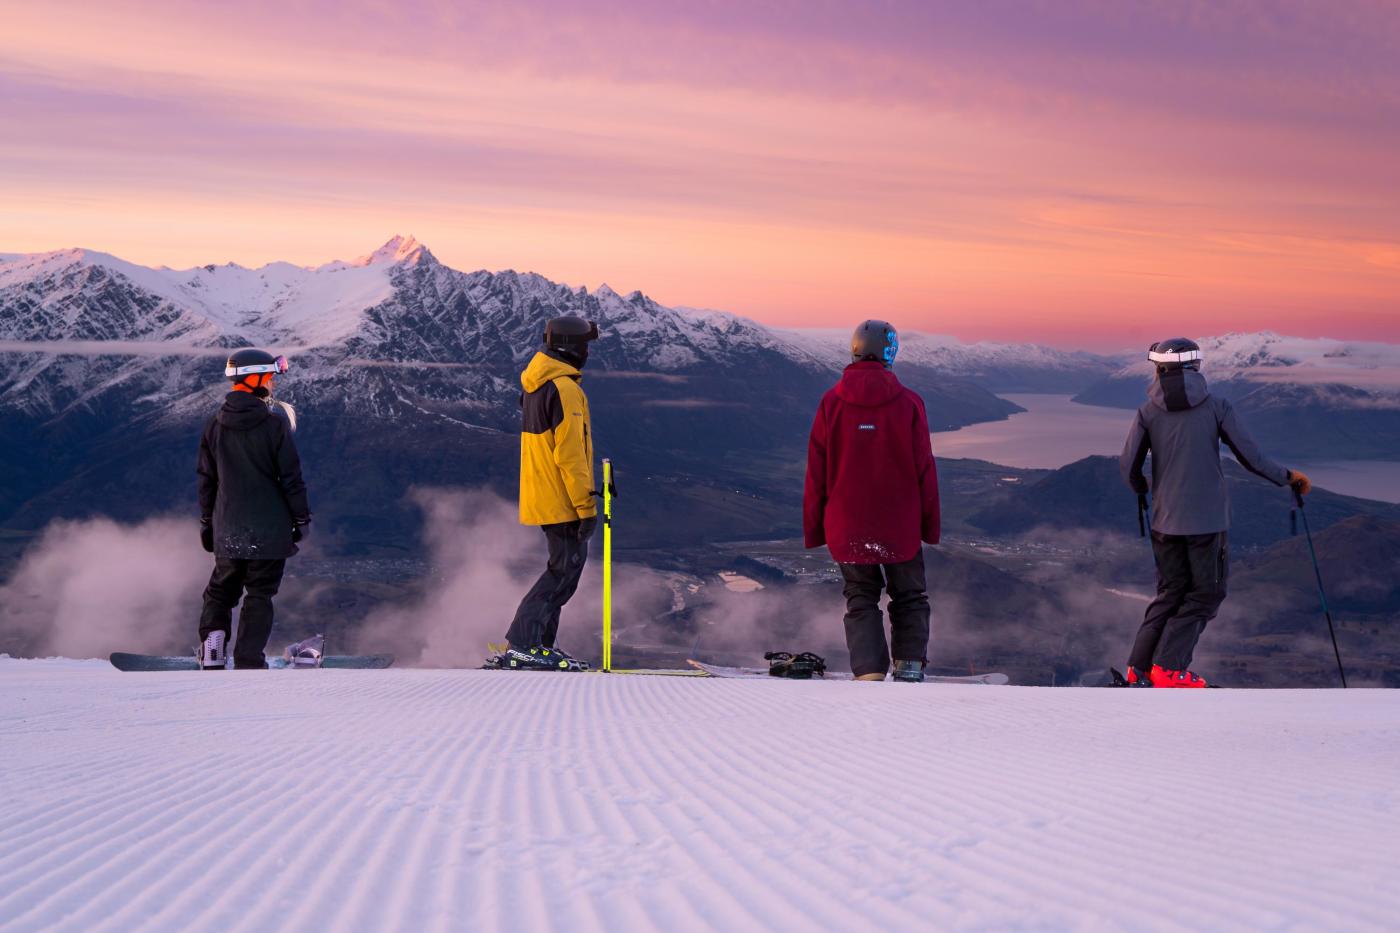 Skiing at sunrise at Coronet Peak